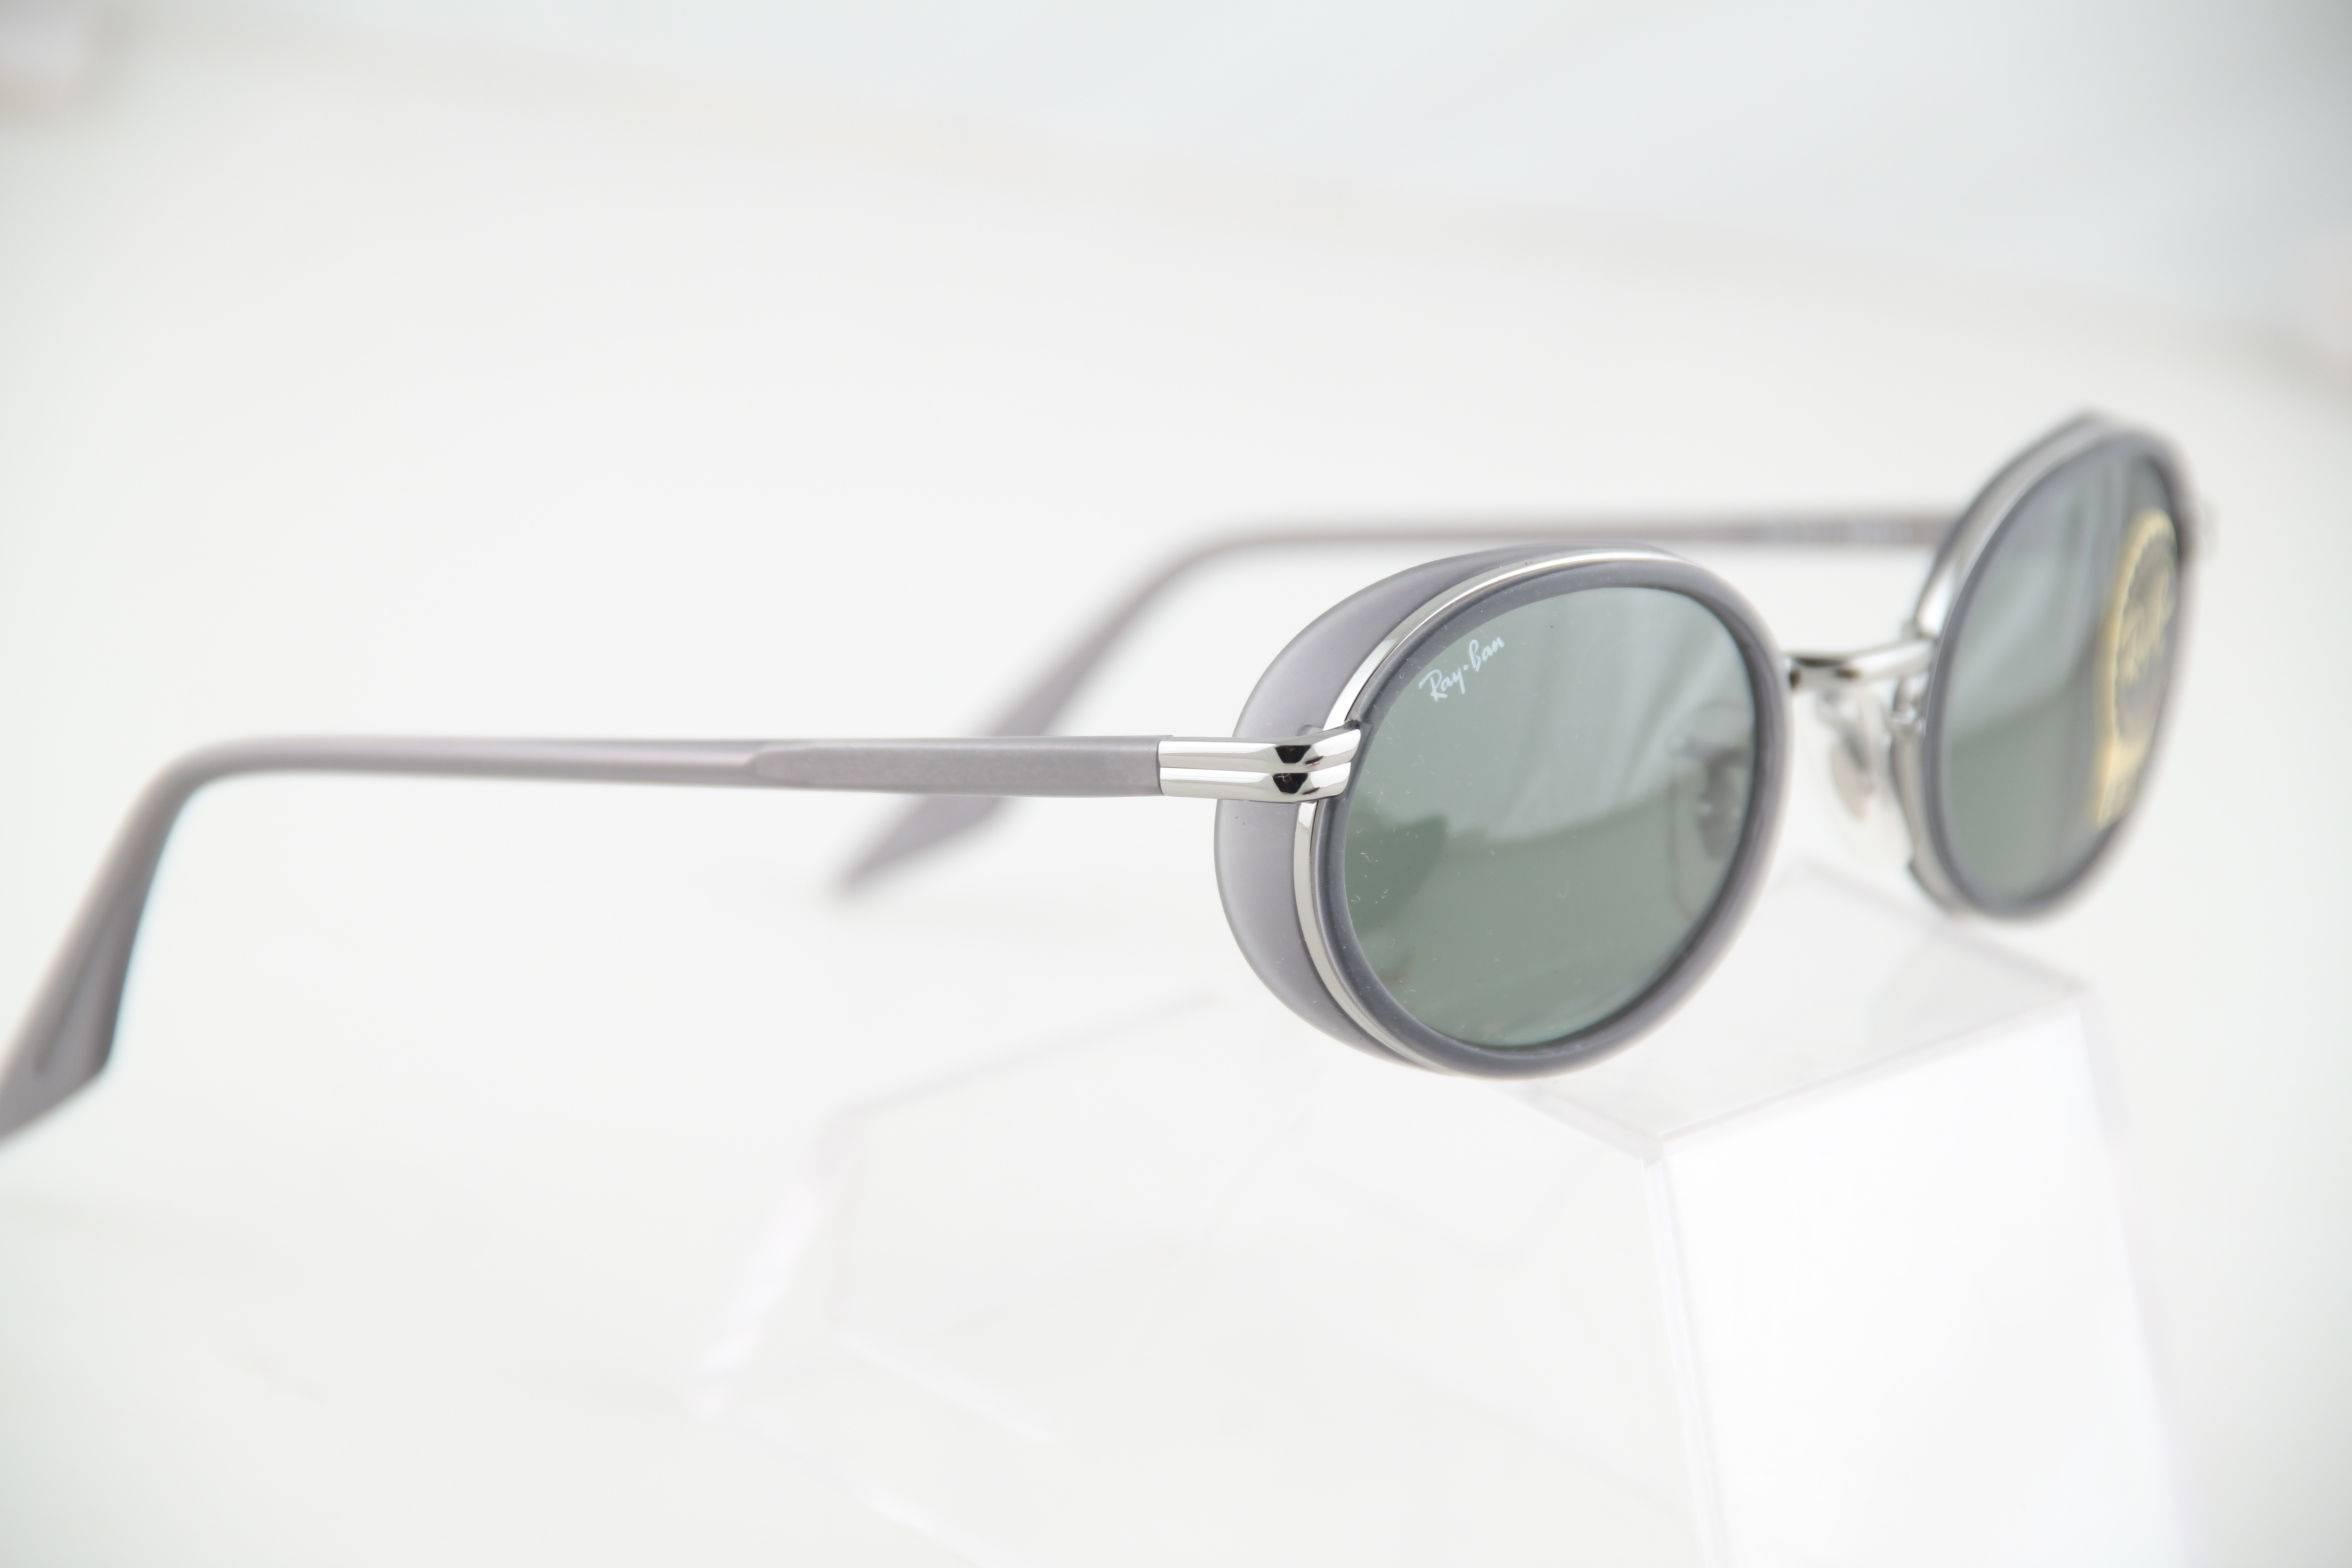 RAY-BAN B&L Vintage GRAY MINT unisex Sunglasses RB3037 W2813 50mm SIDE SHIELDS 3